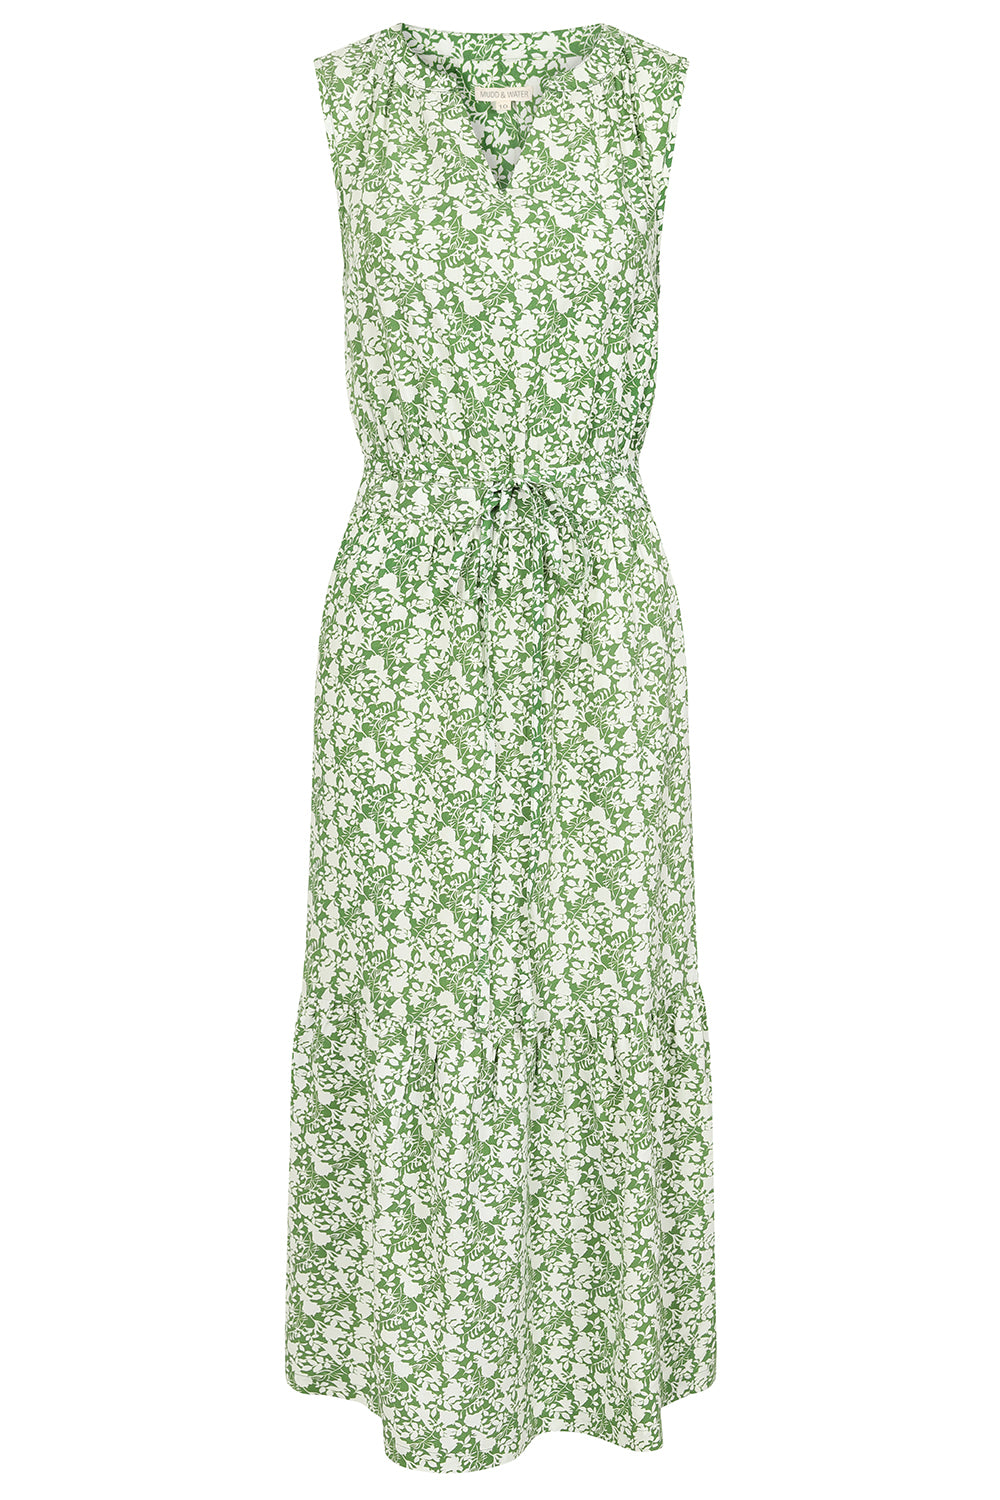 Leila Dress  - Green Foliage Print - Lenzing EcoVero